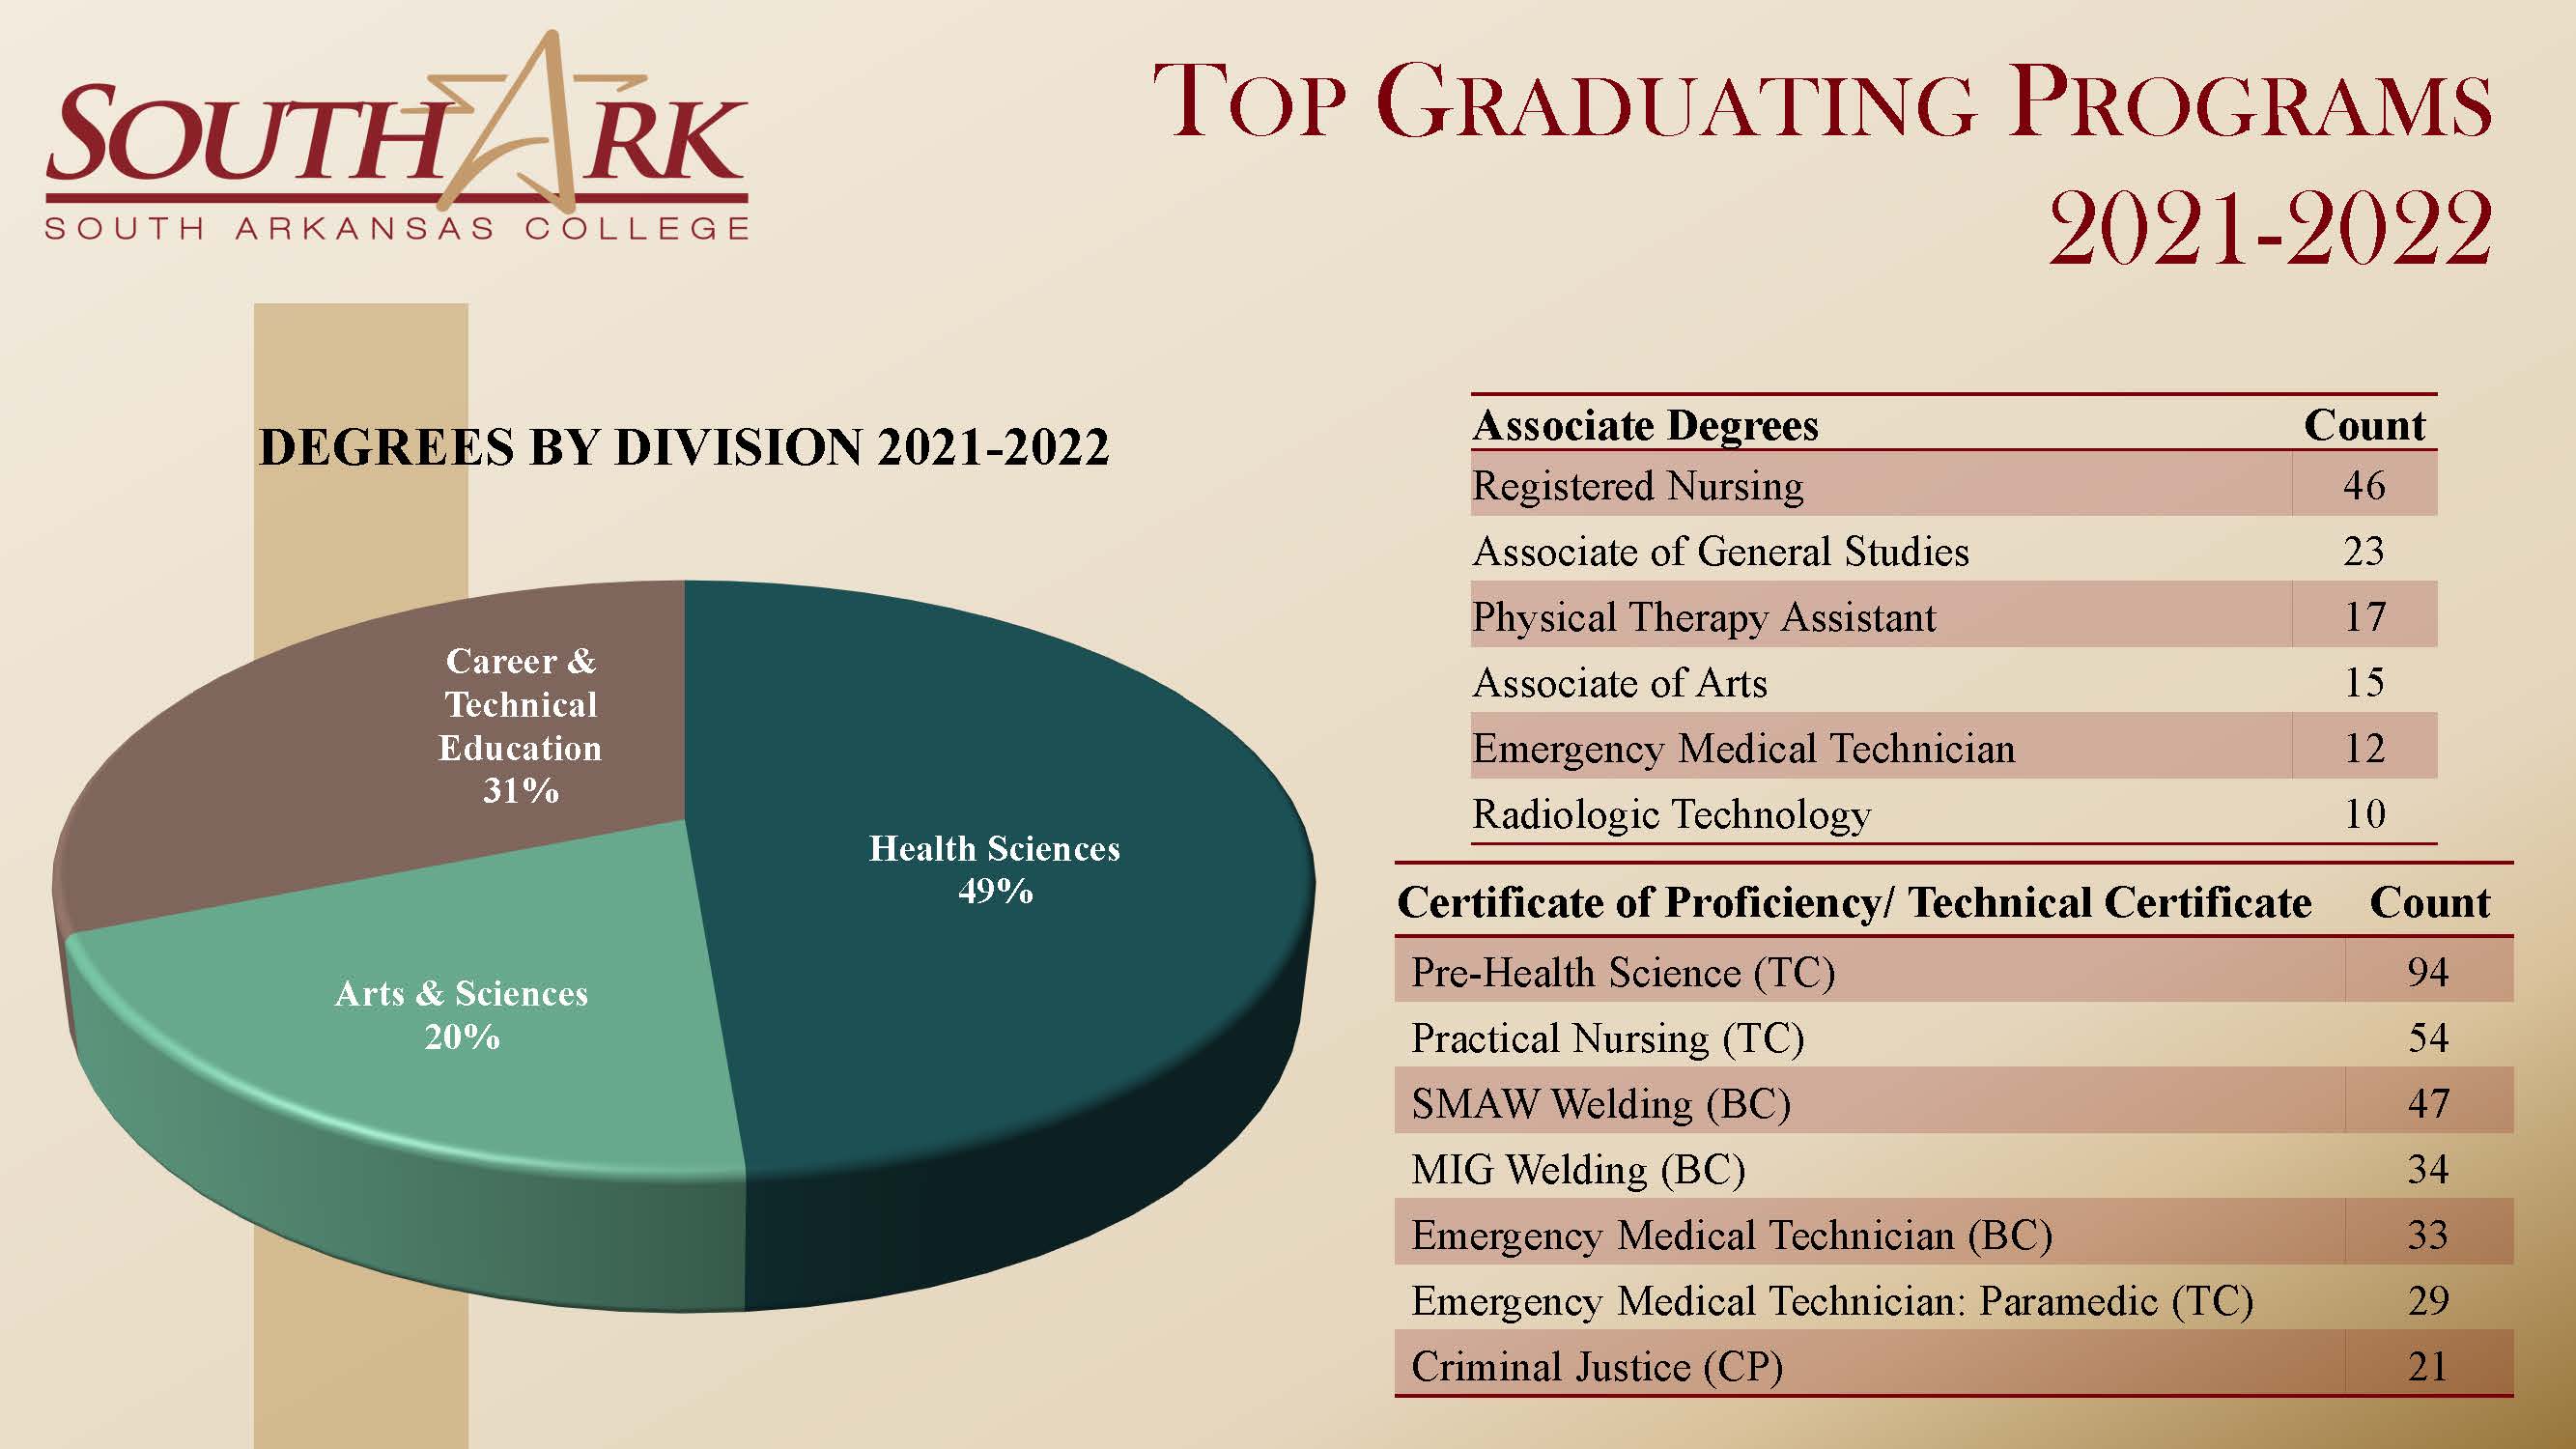 Top Graduating Programs 2021-2022